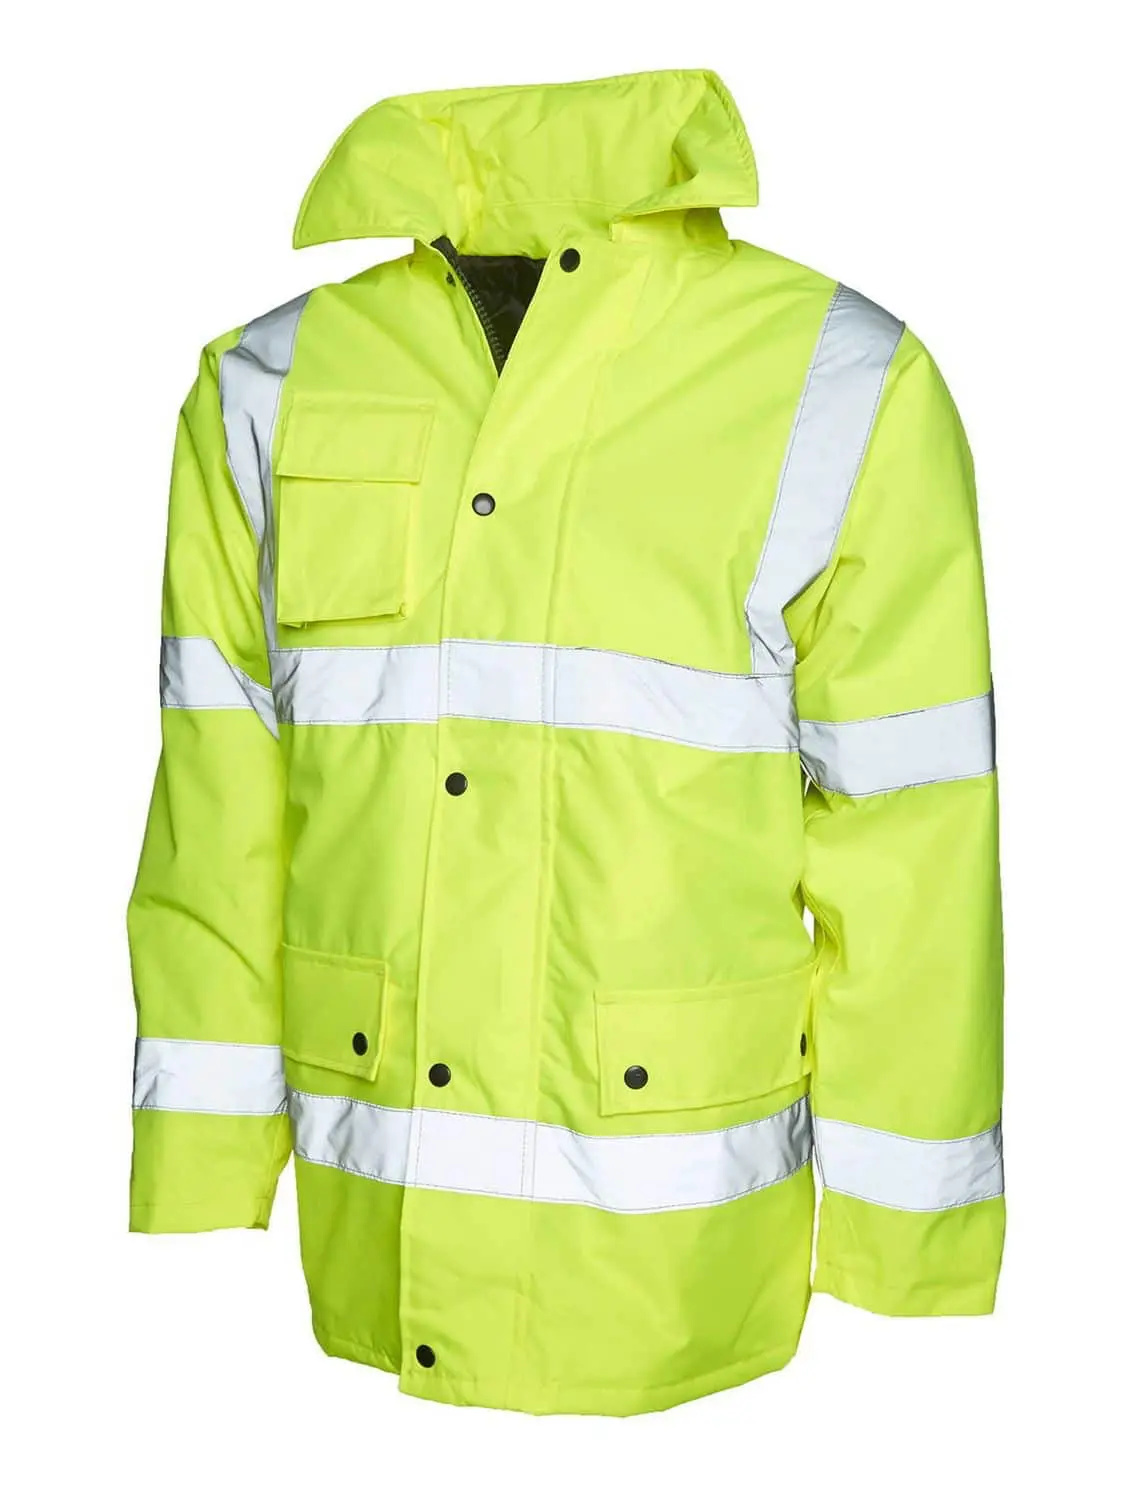 Uneek Road Safety Jacket - Yellow